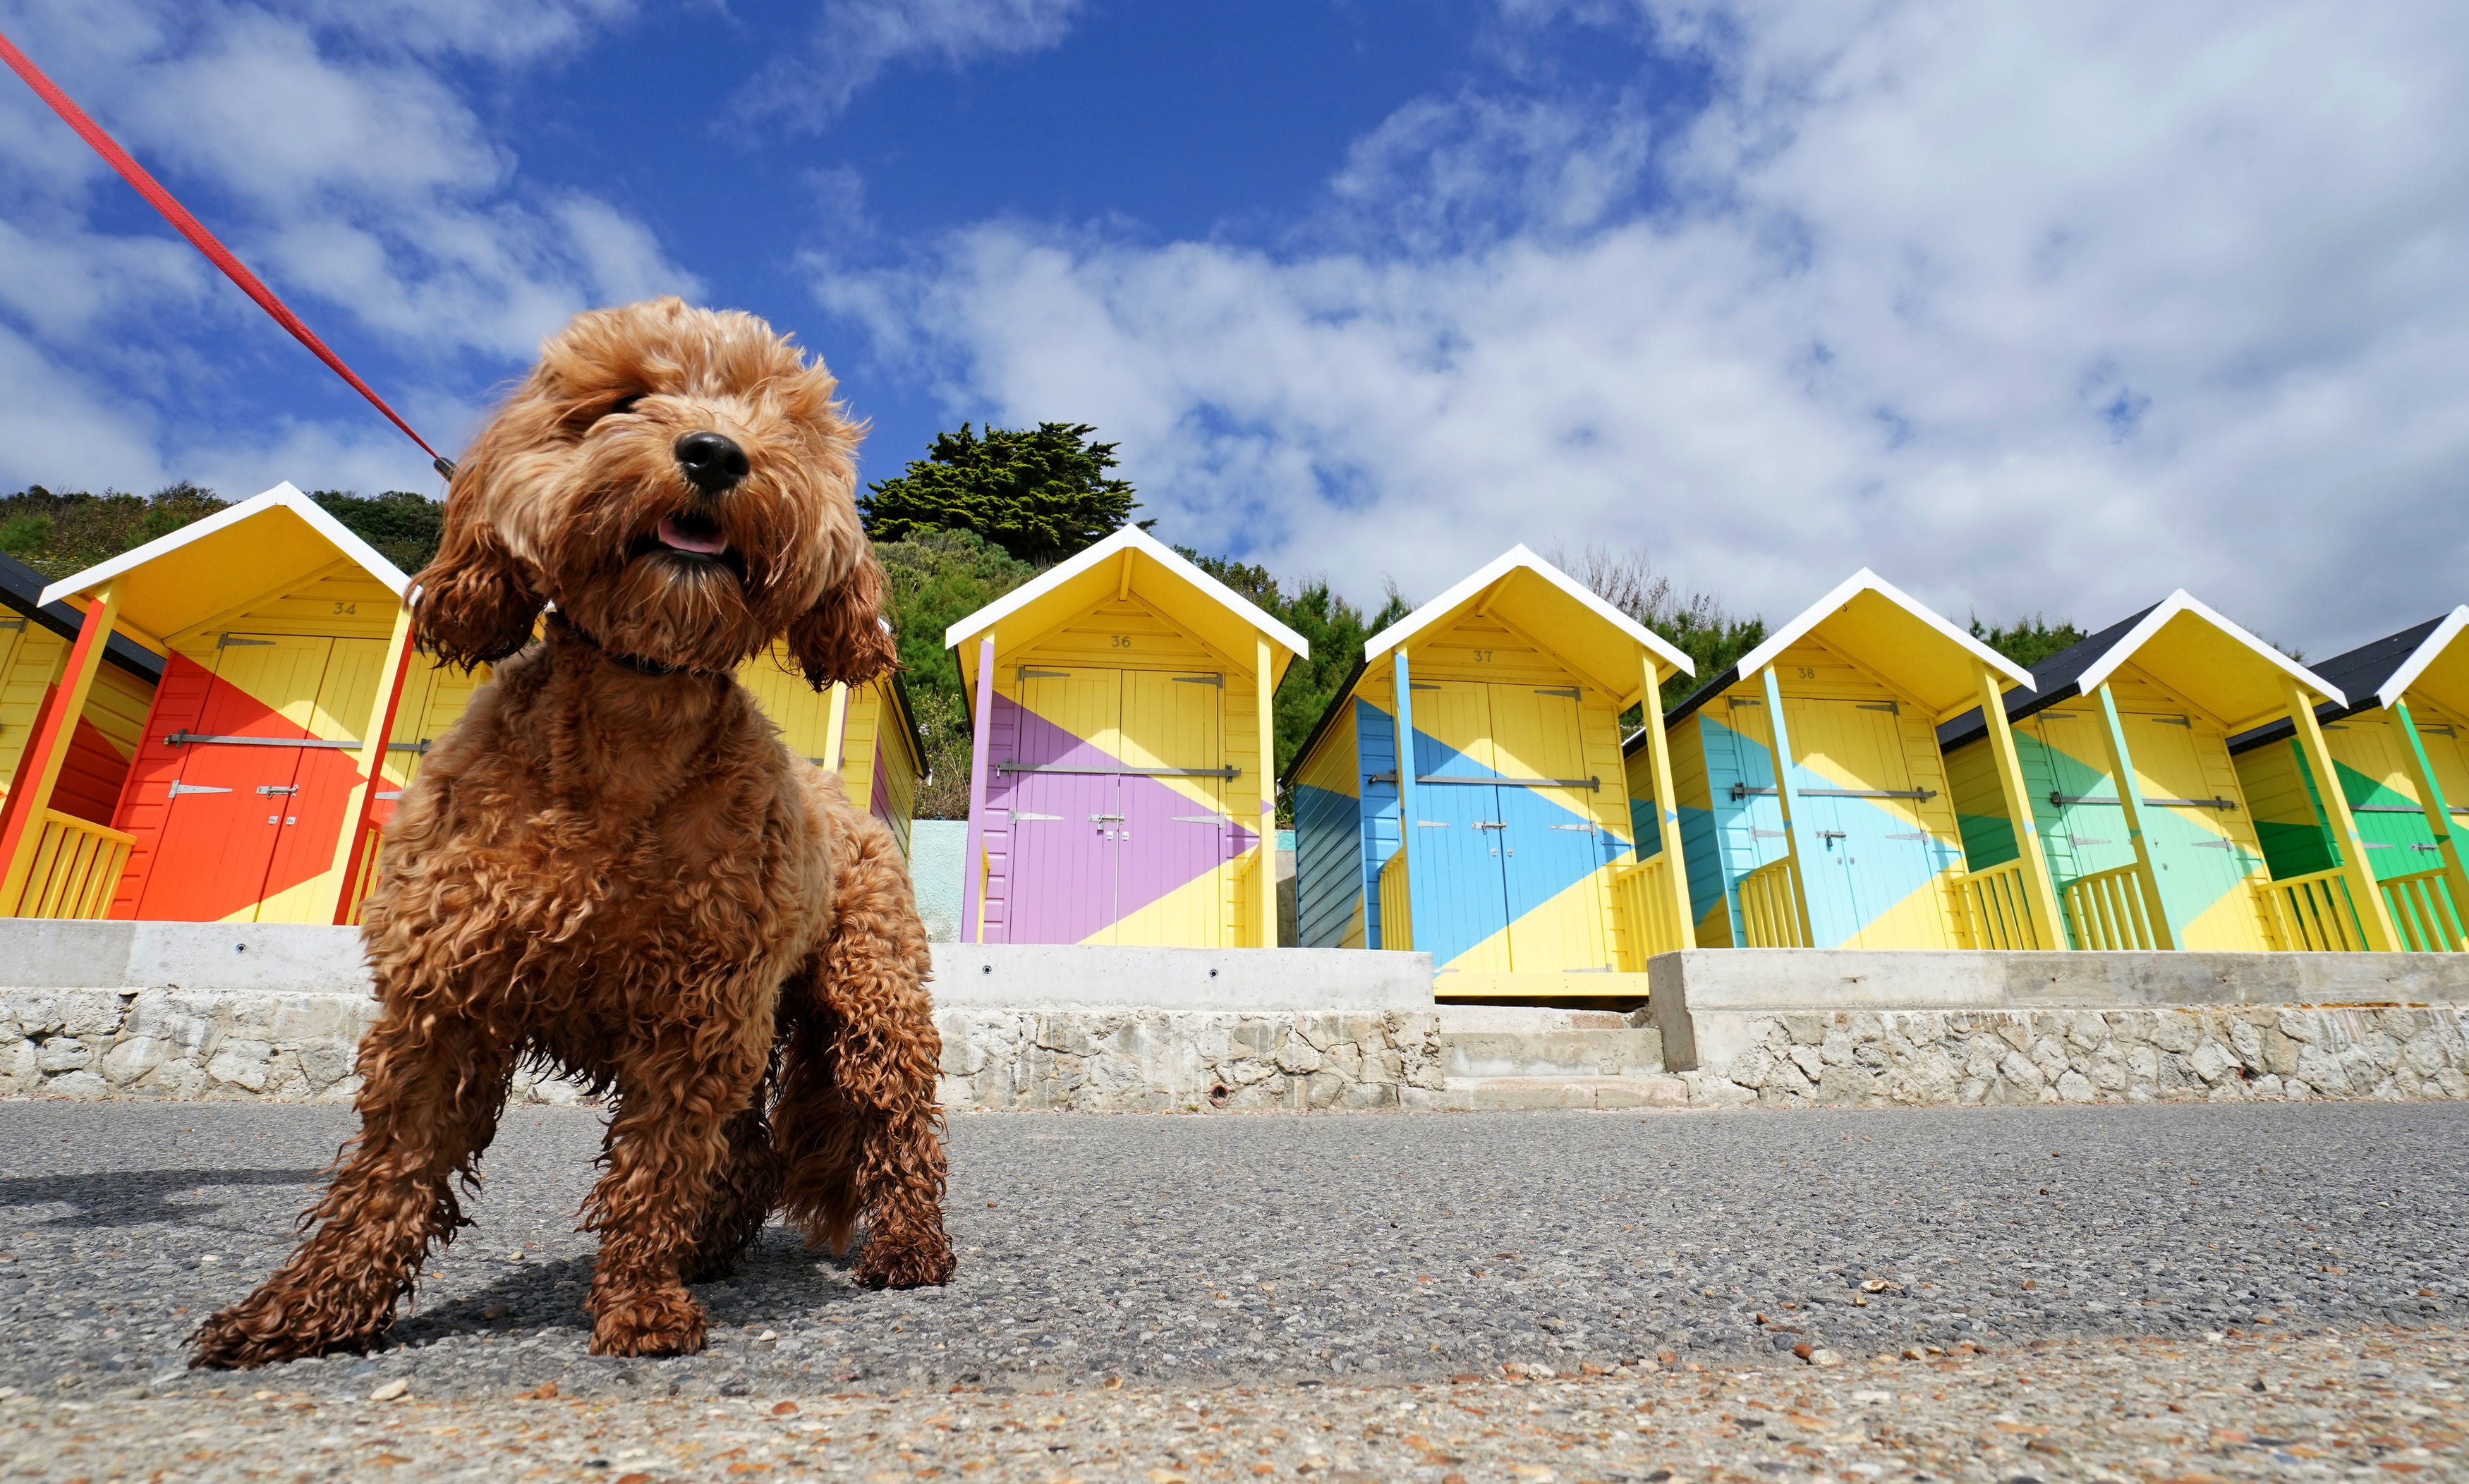 The newly refurbished beach huts in Folkestone, Kent